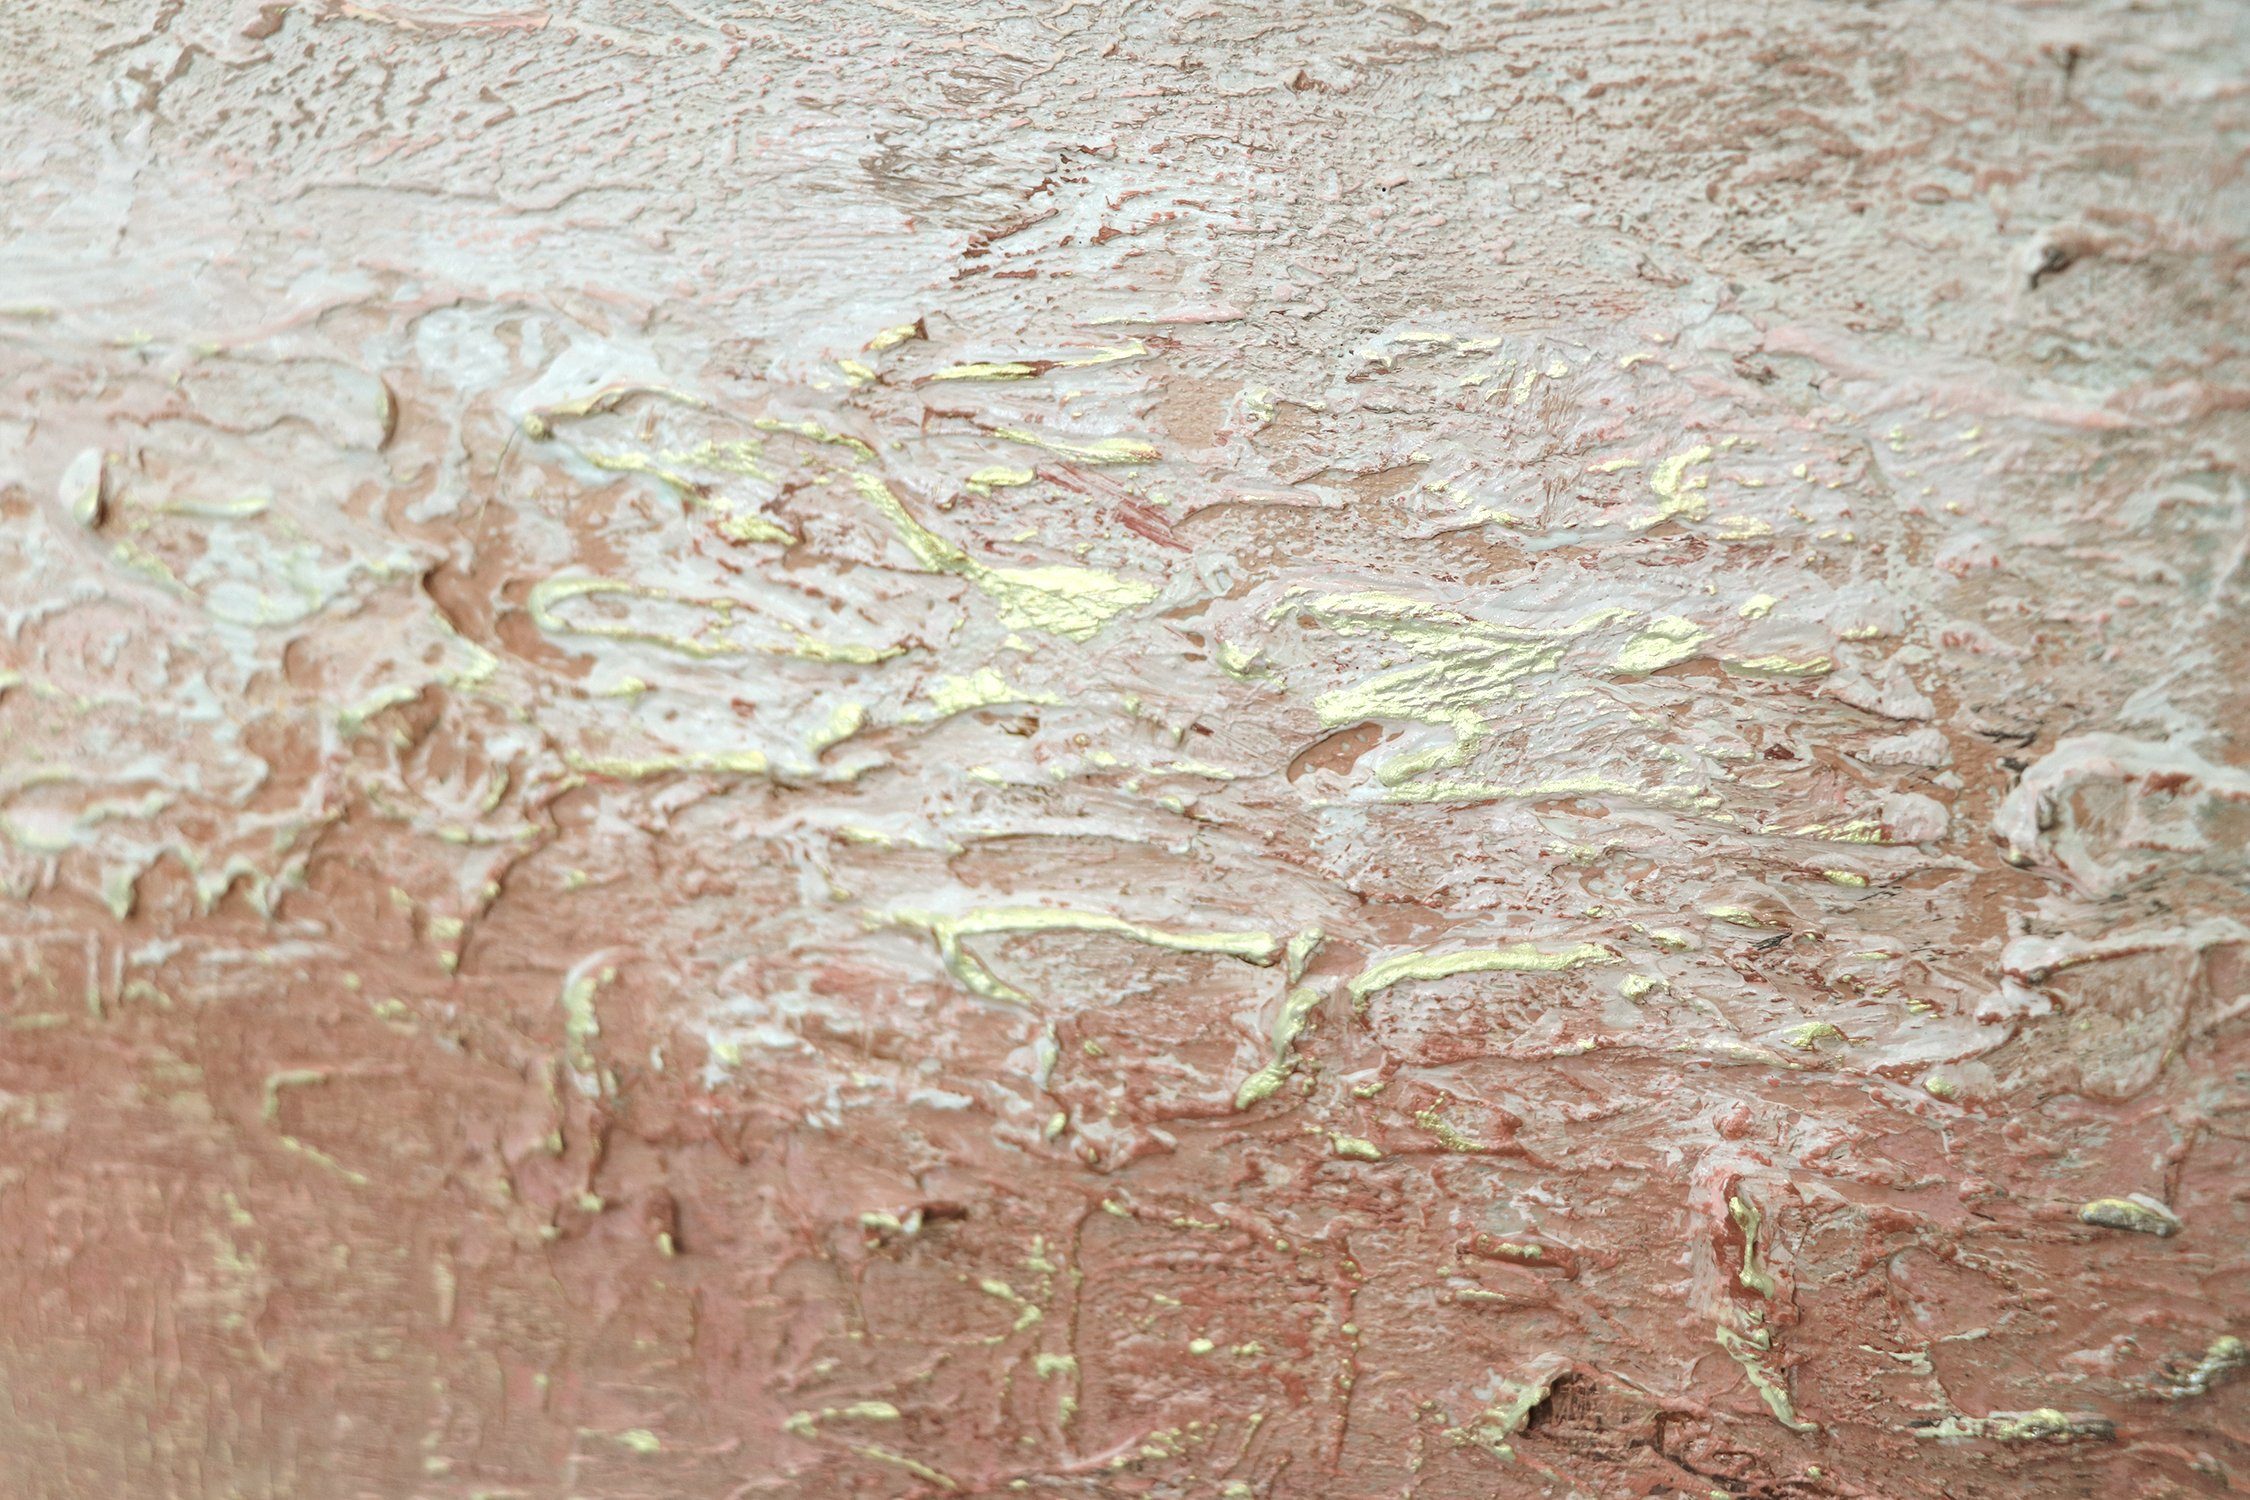 Ohne Goldene Bild Gemälde Abstrakt Leinwand Landschaft, Vögel Handgemalt Sonne II, YS-Art Sonnenenergie Schattenfugenrahmen